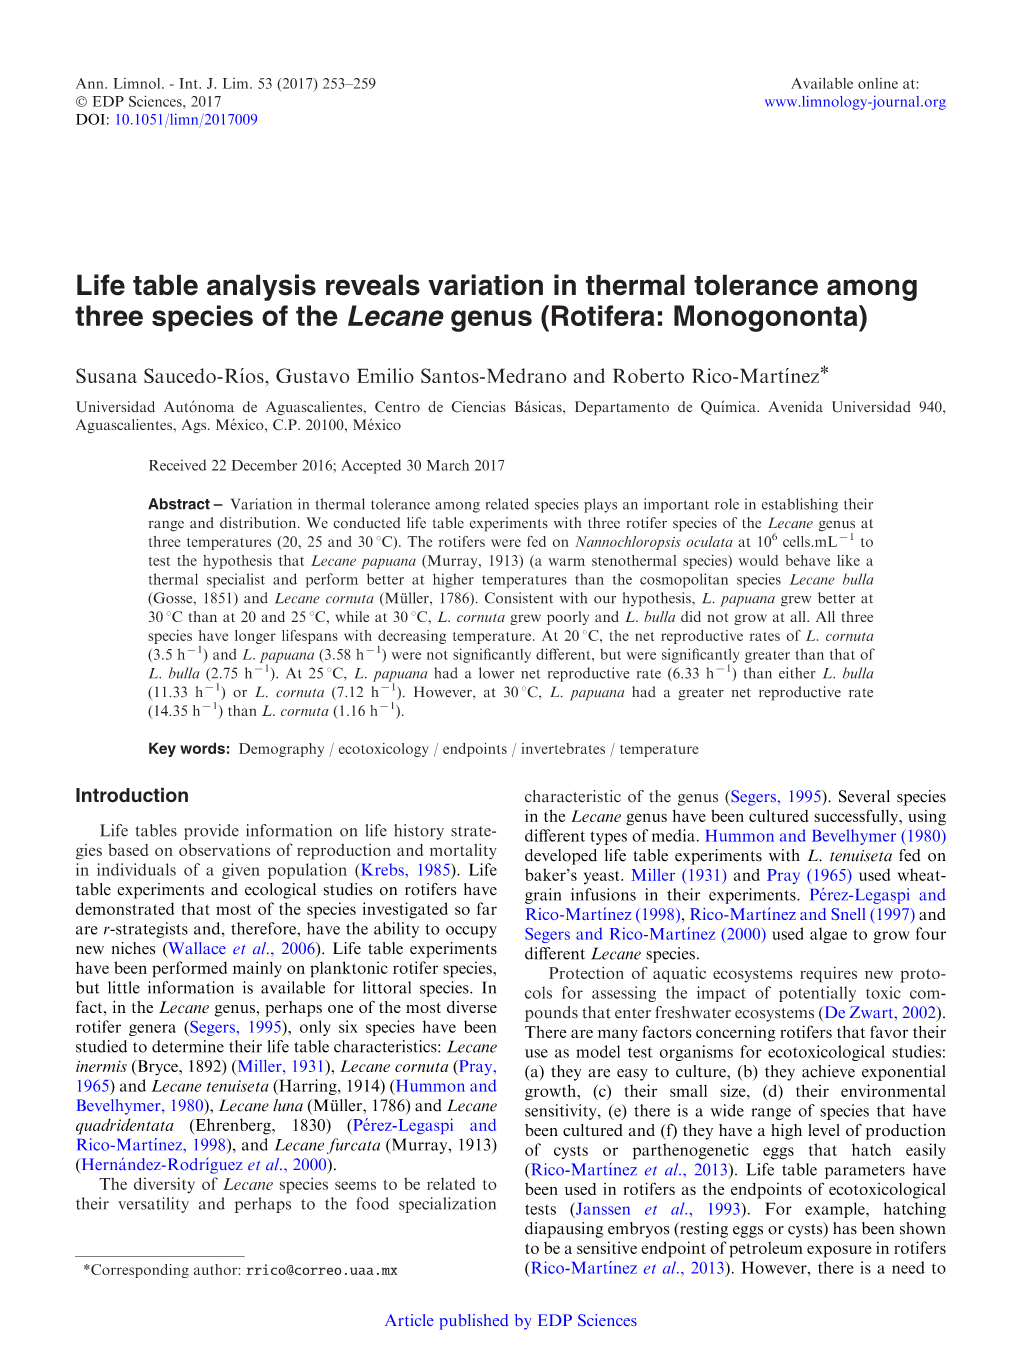 Life Table Analysis Reveals Variation in Thermal Tolerance Among Three Species of the Lecane Genus (Rotifera: Monogononta)